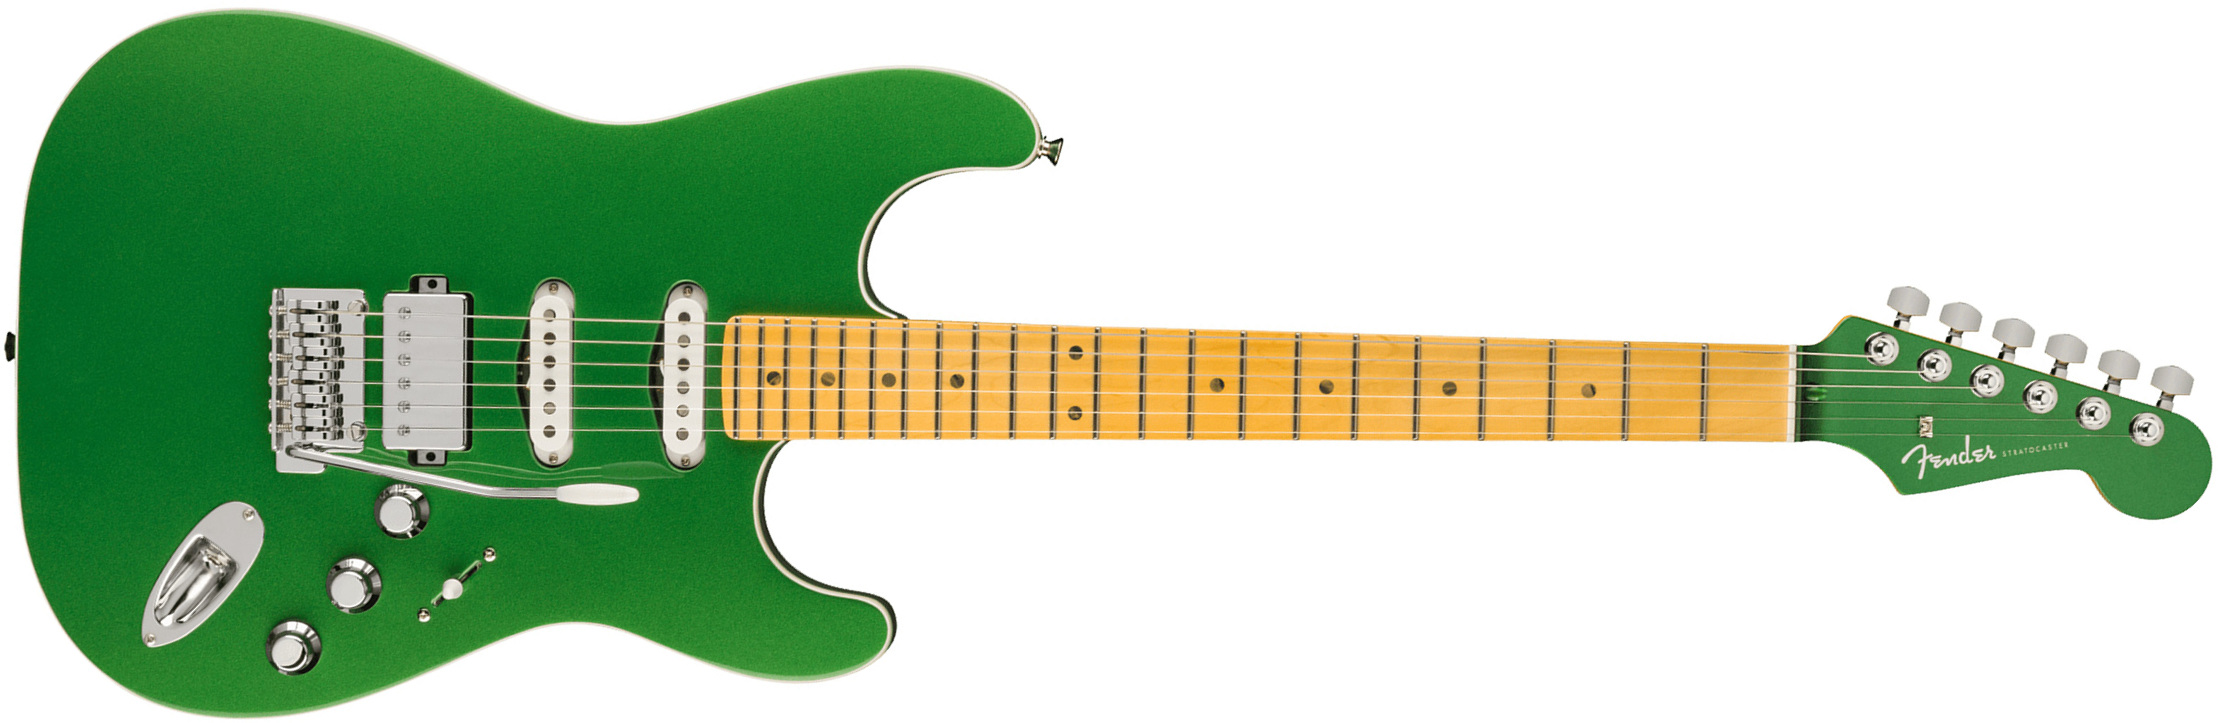 Fender Strat Aerodyne Special Jap Trem Hss Mn - Speed Green Metallic - Guitare Électrique Forme Str - Main picture